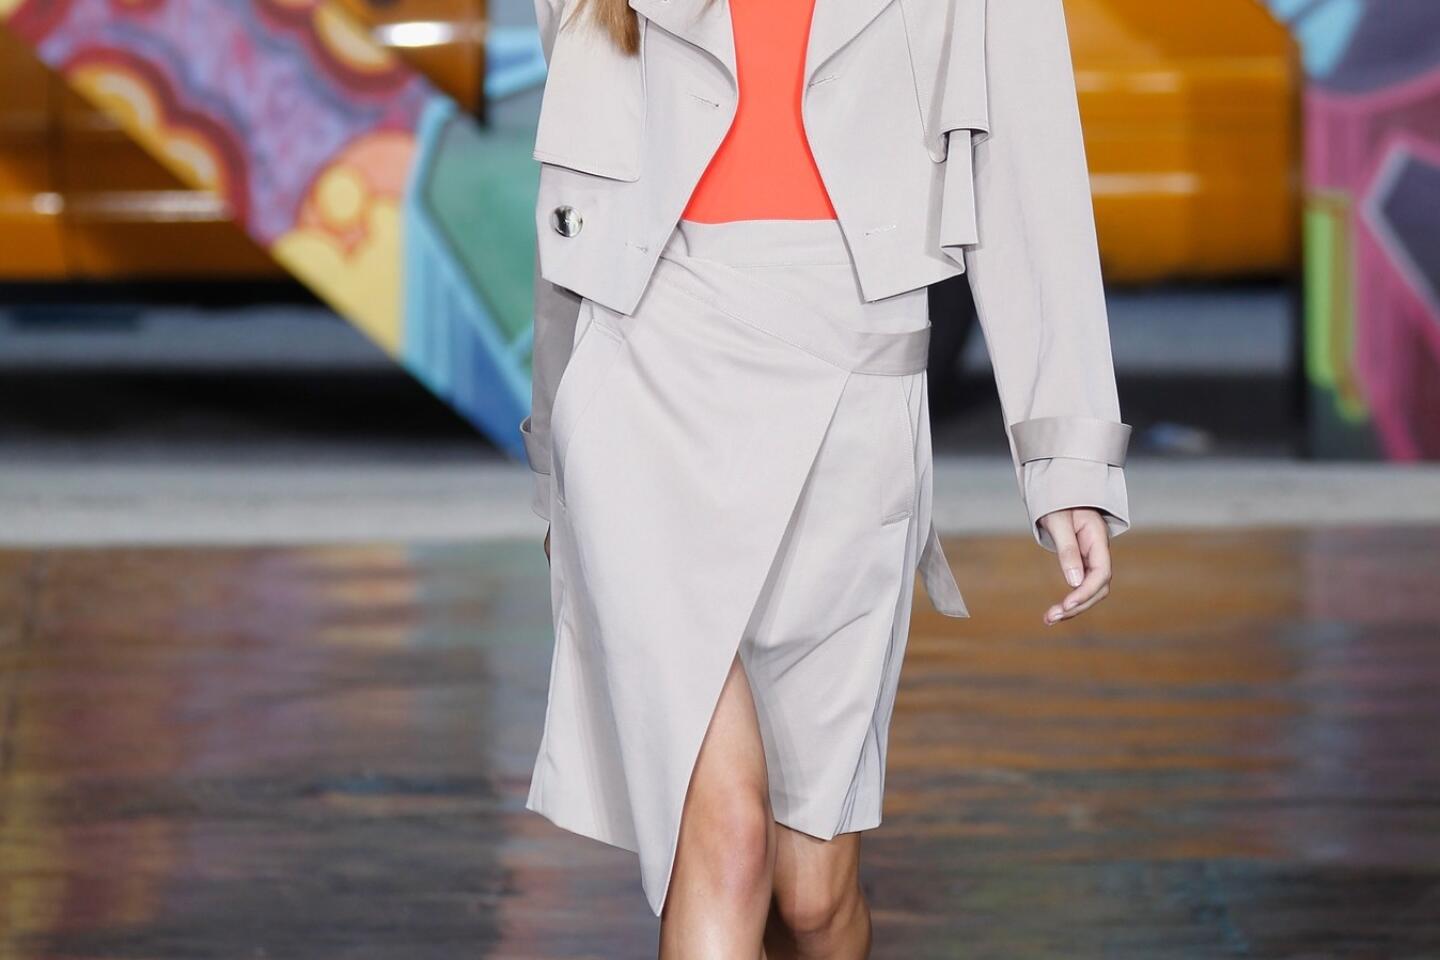 N.Y. Fashion Week: At DKNY, 'real people' on the runway - Los Angeles Times